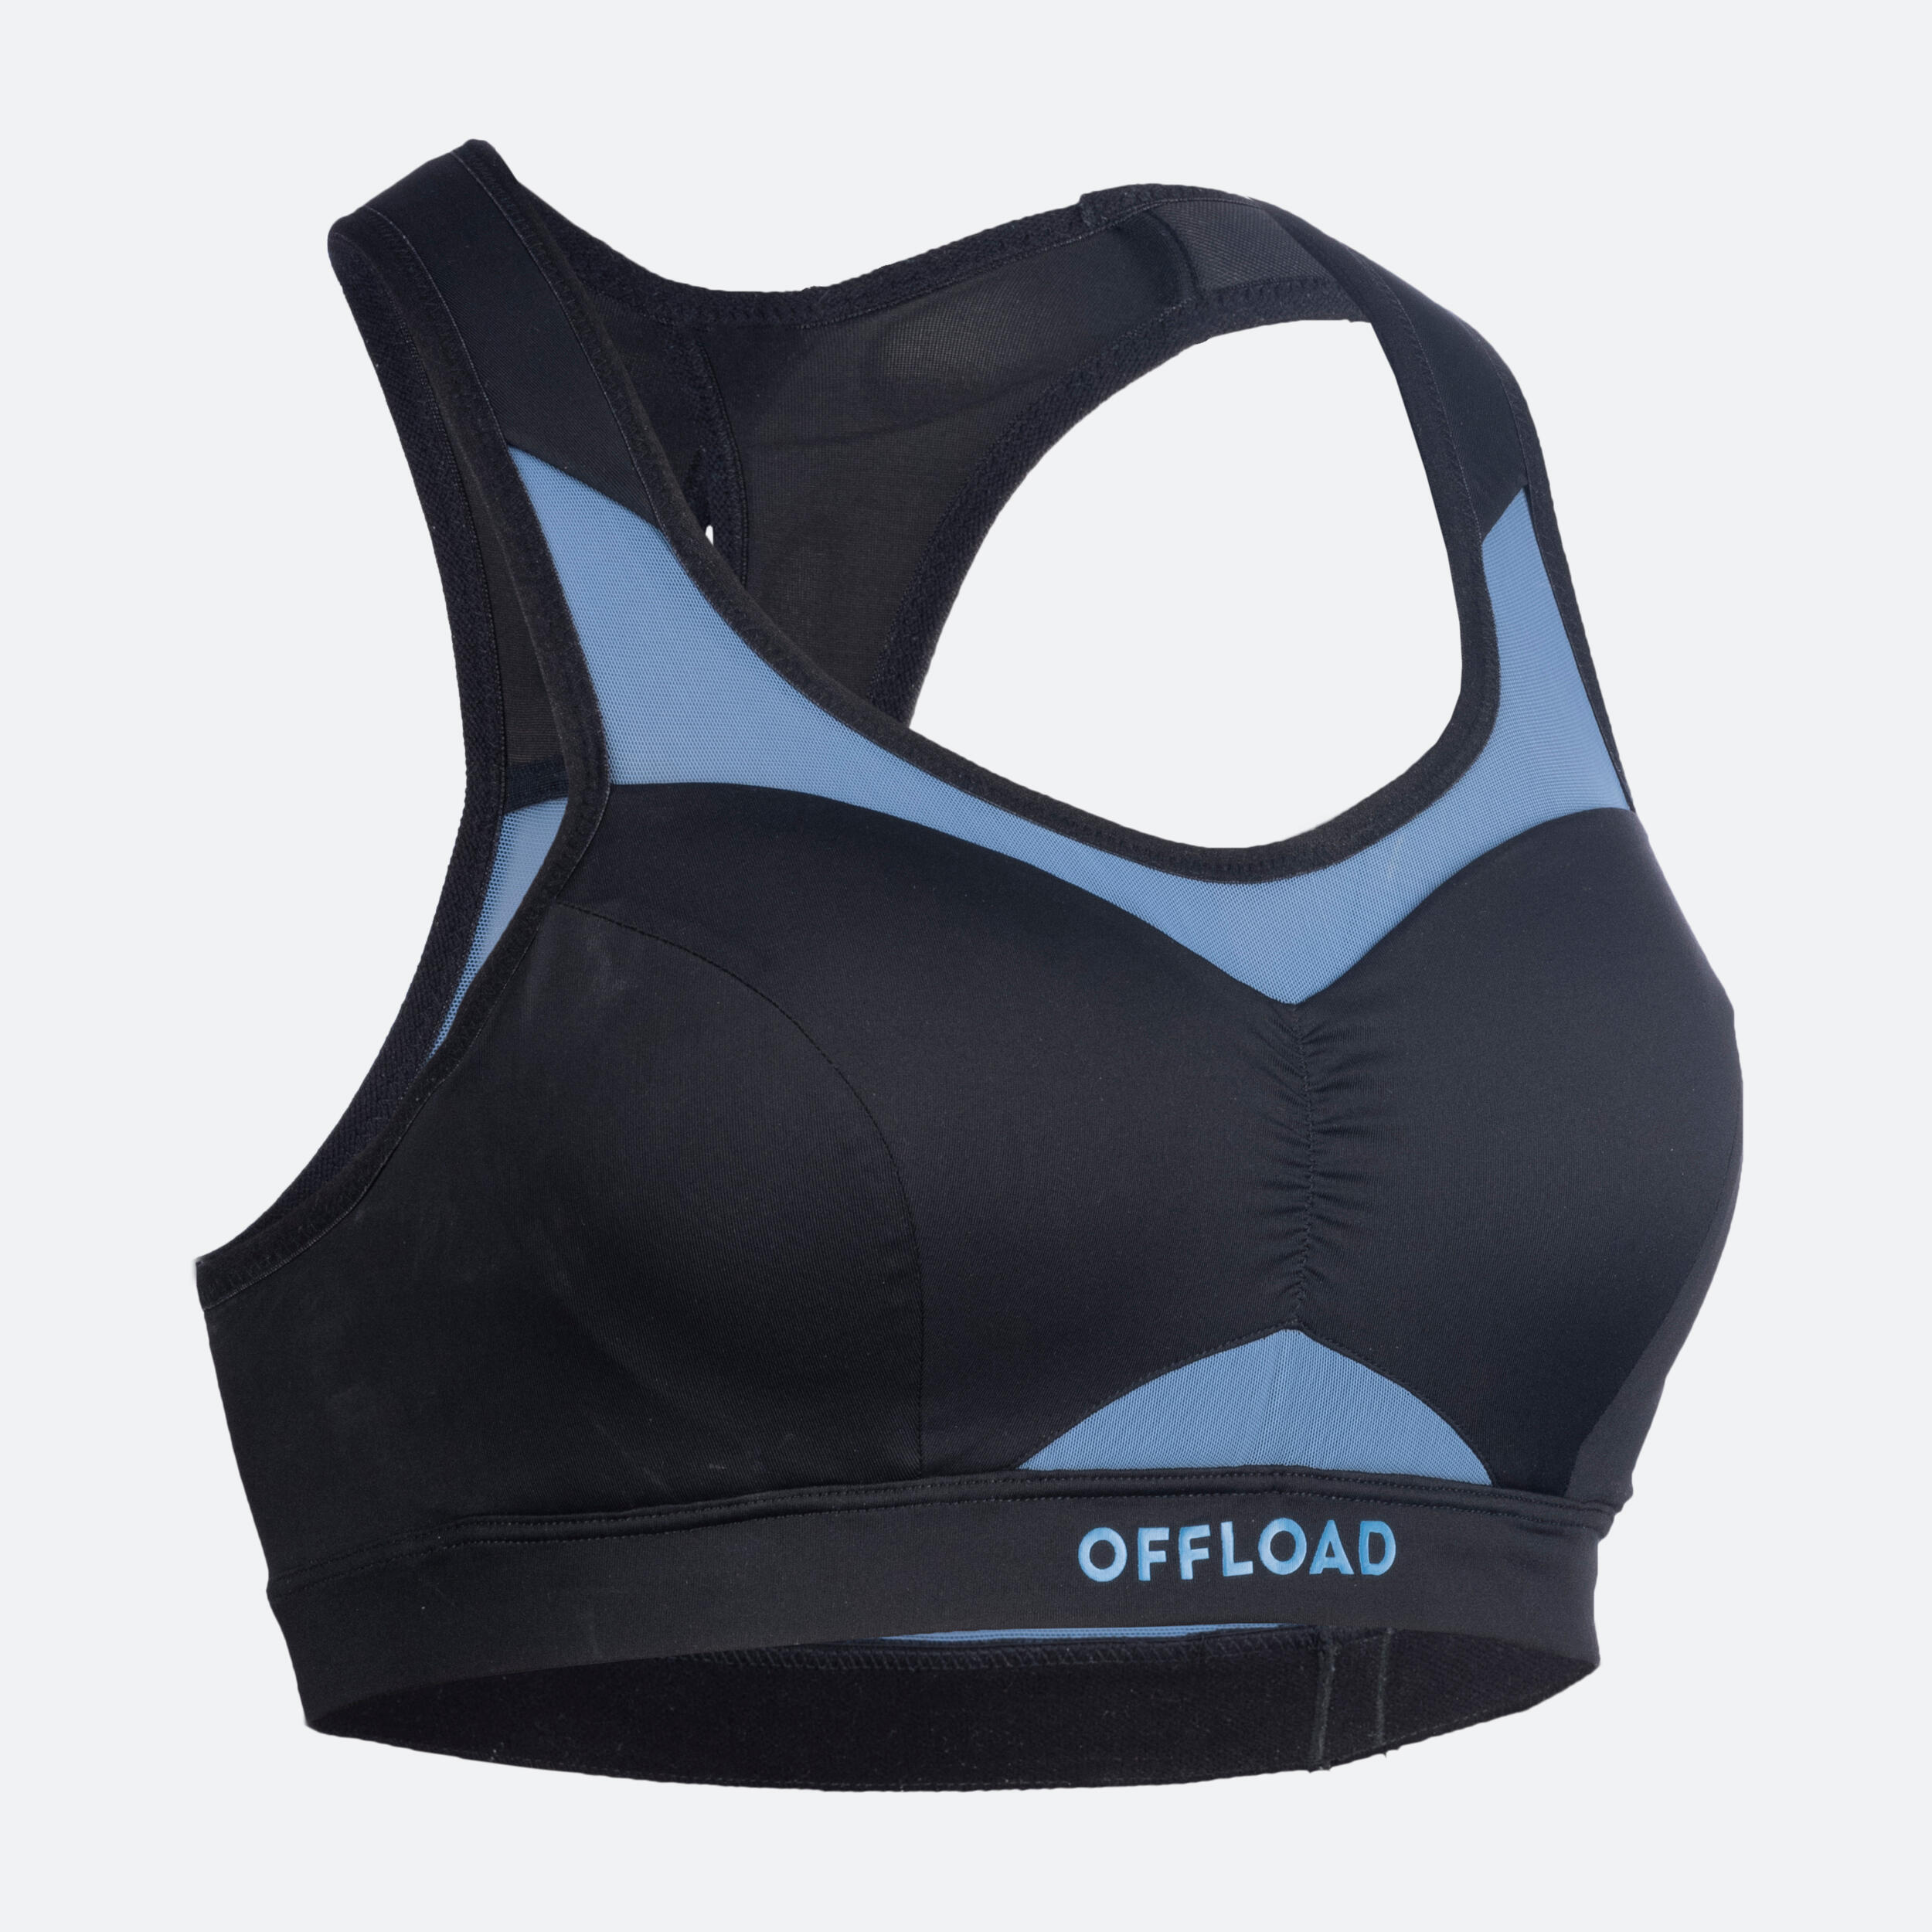 OFFLOAD Women's Rugby Sports Bra R500 - Black/Blue